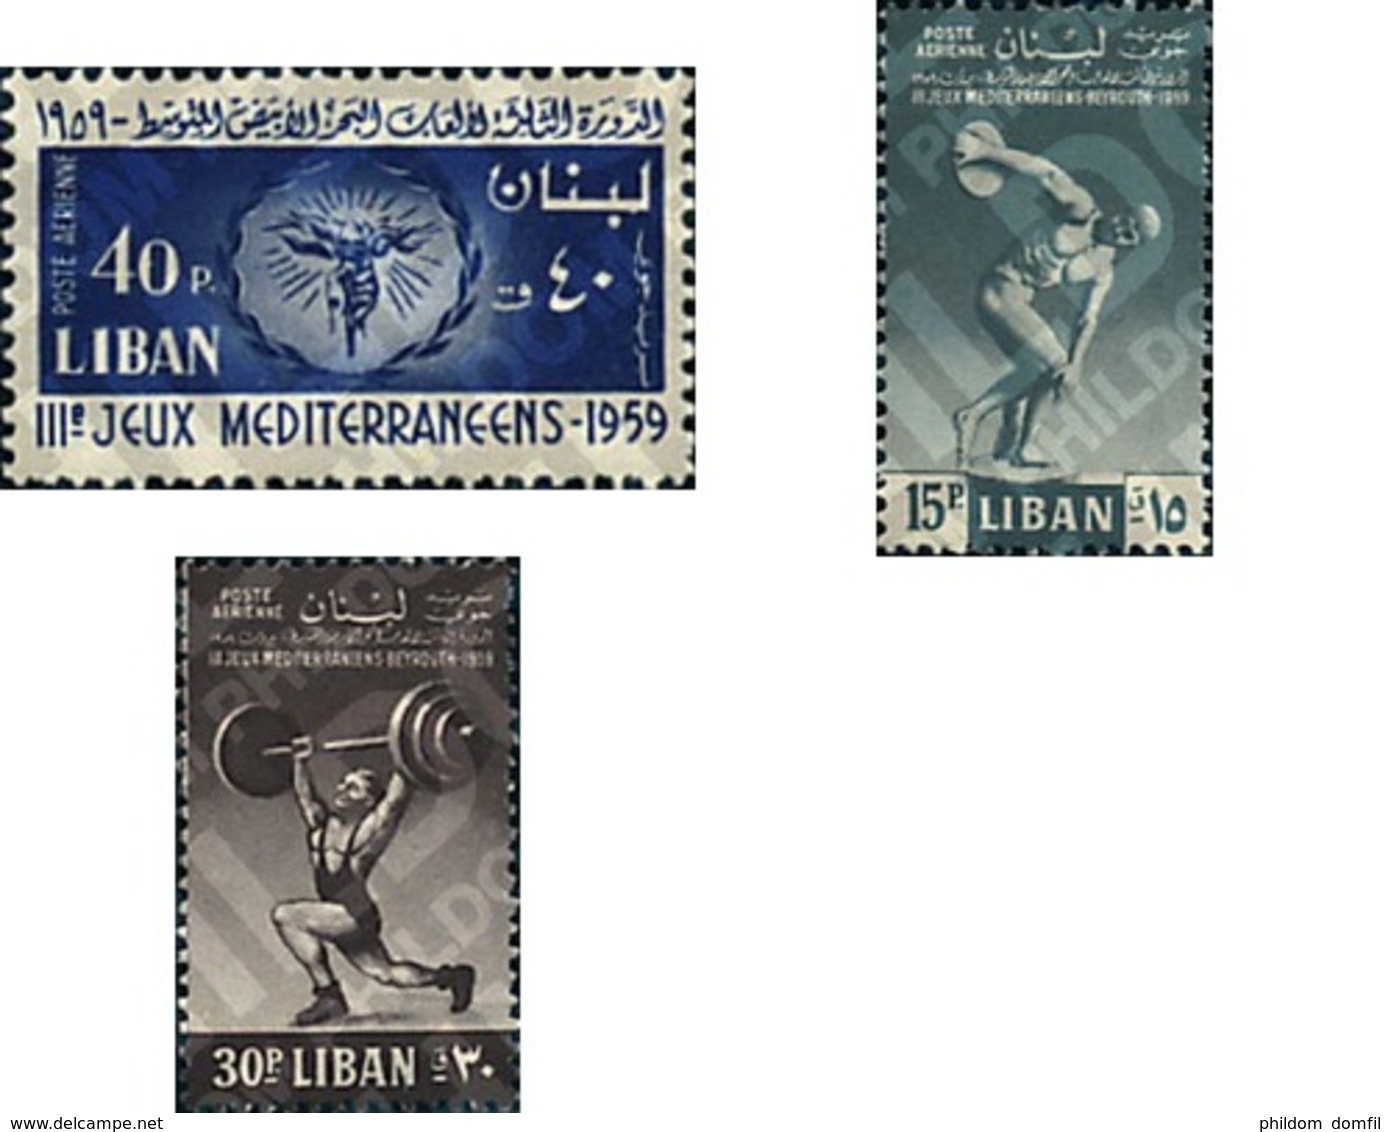 Ref. 73950 * MNH * - LIBAN. 1959. 3rd MEDITERRANEAN GAMES . 3 JUEGOS MEDITERRANEOS - Weightlifting